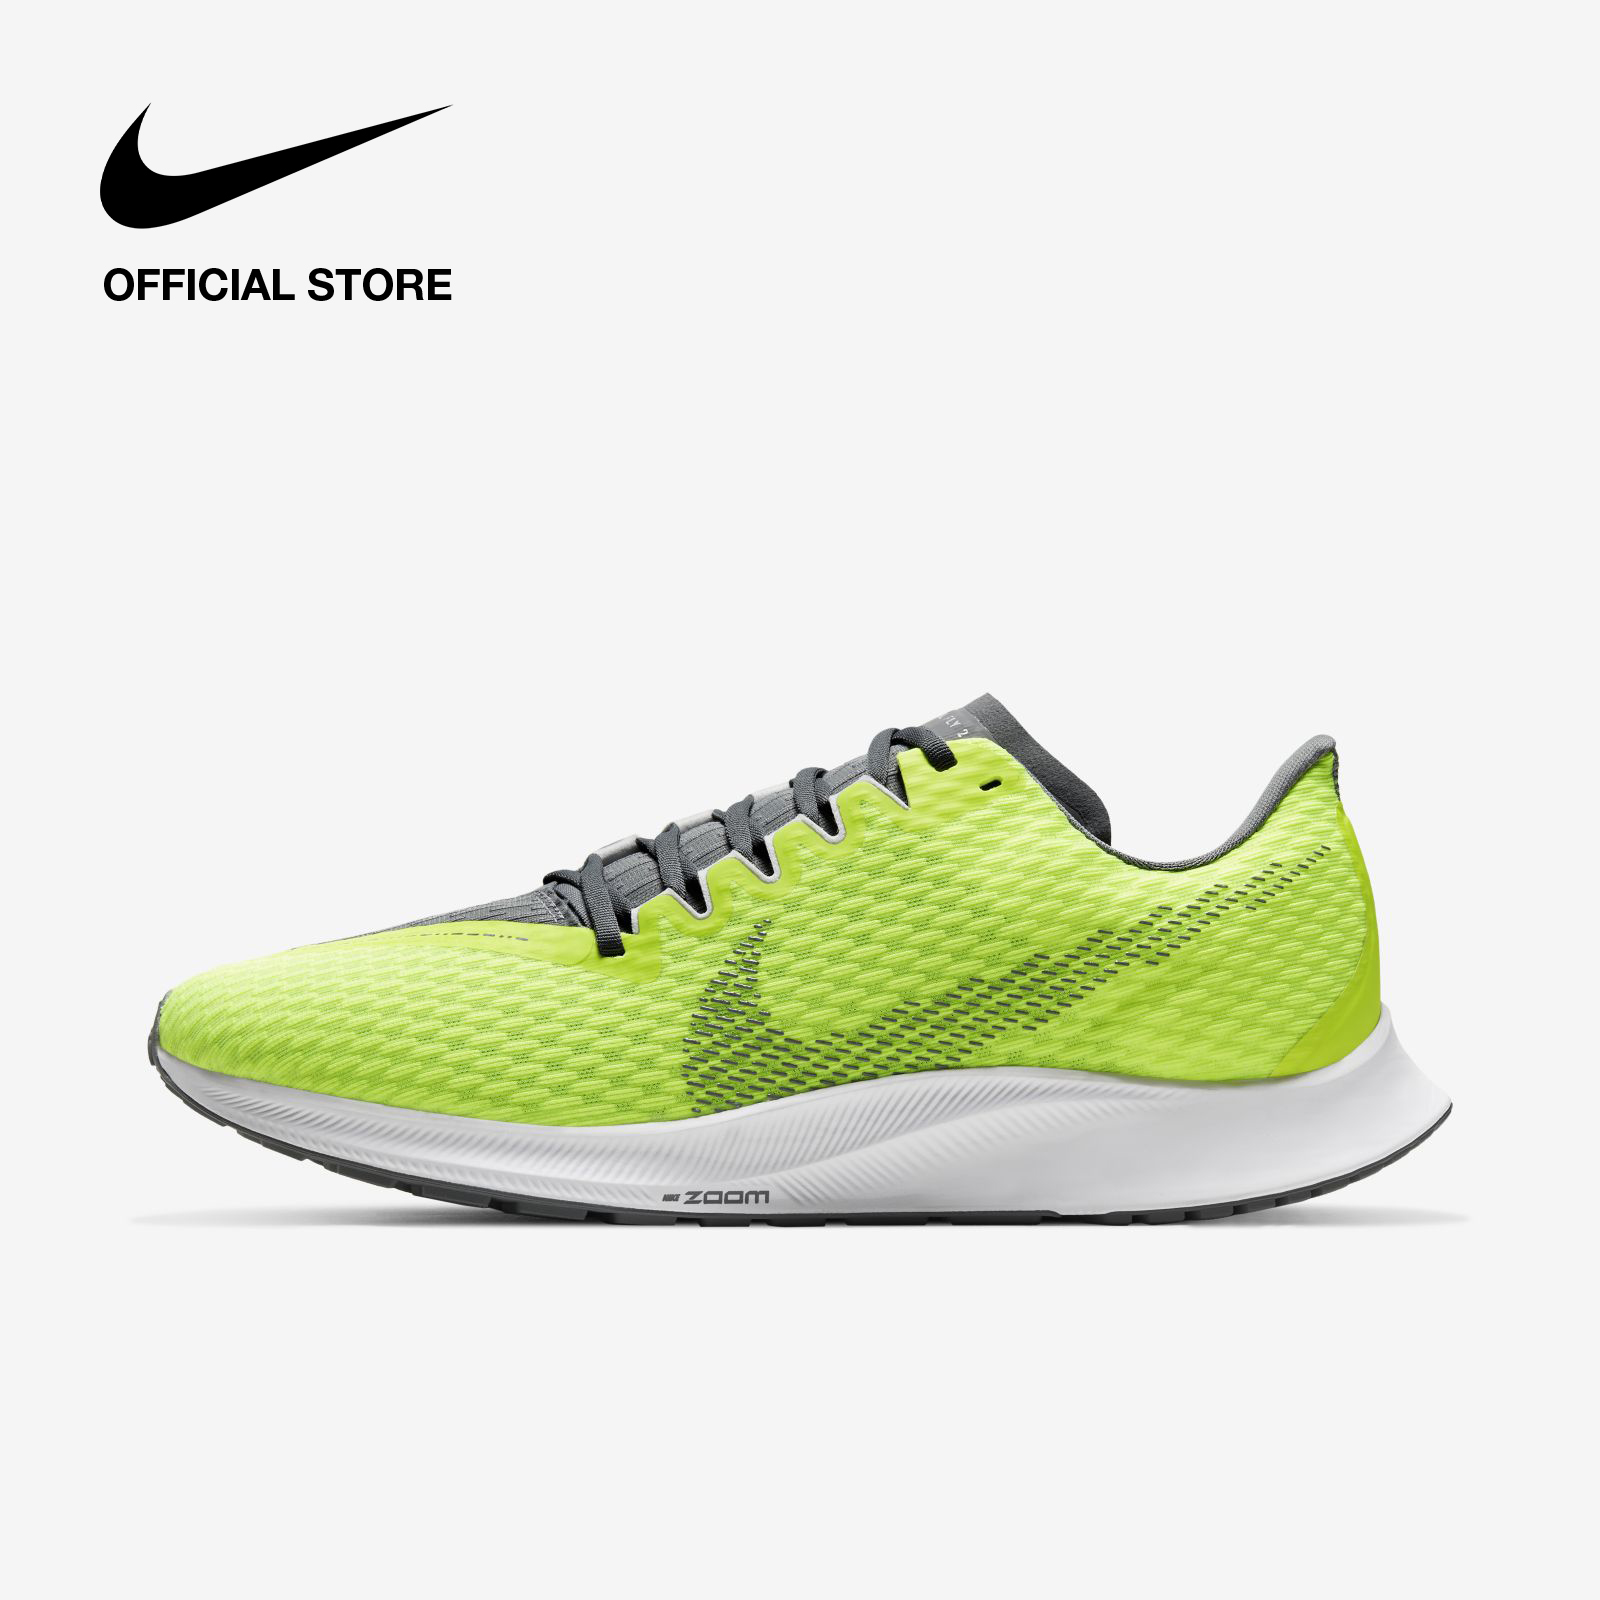 Nike Men's Zoom Rival Fly 2 Running Shoes - Yellow ไนกี้ รองเท้าวิ่งผู้ชาย ซูม ไรเวิล ฟลาย 2 - สีเหลือง